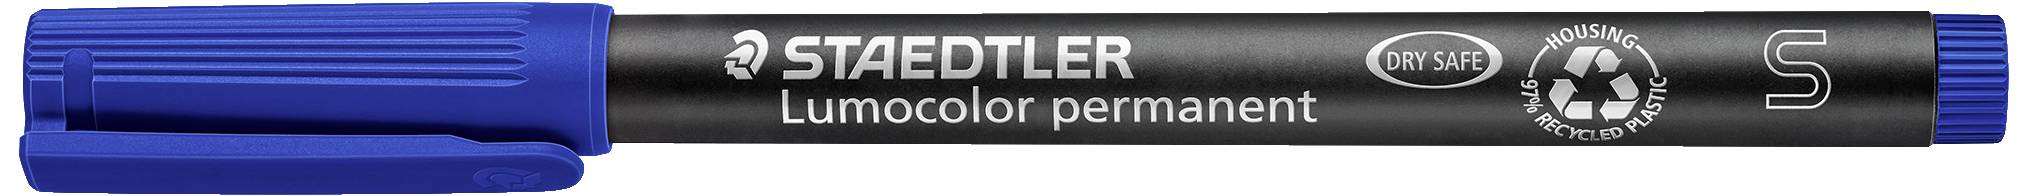 STAEDTLER Projektionsschreiber Lumocolor 313 perm